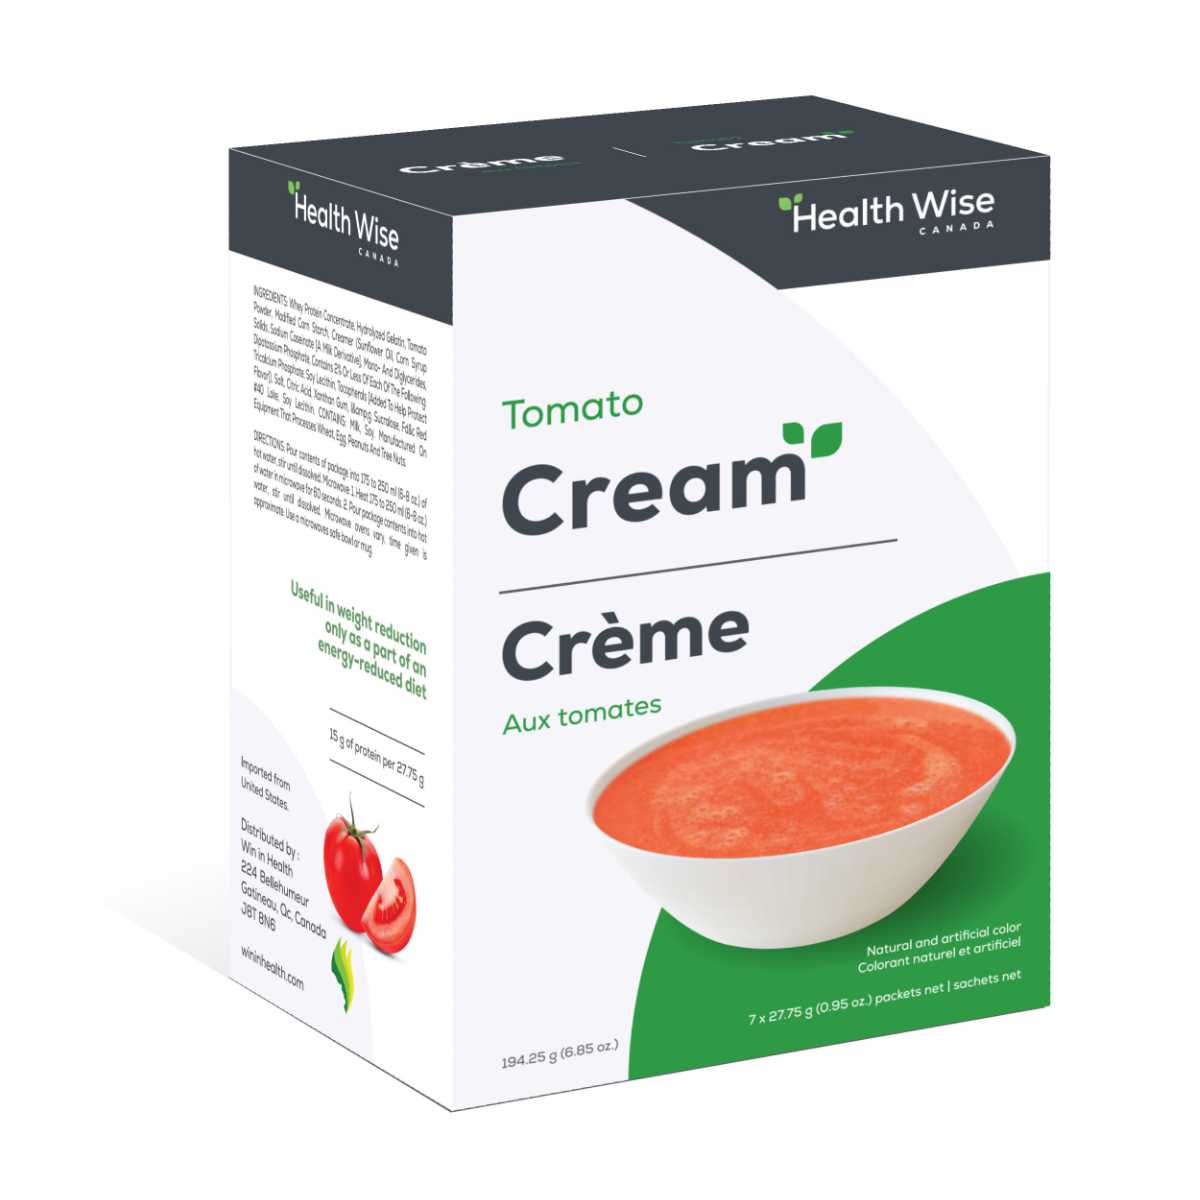 Health wise - protein soup - tomato cream